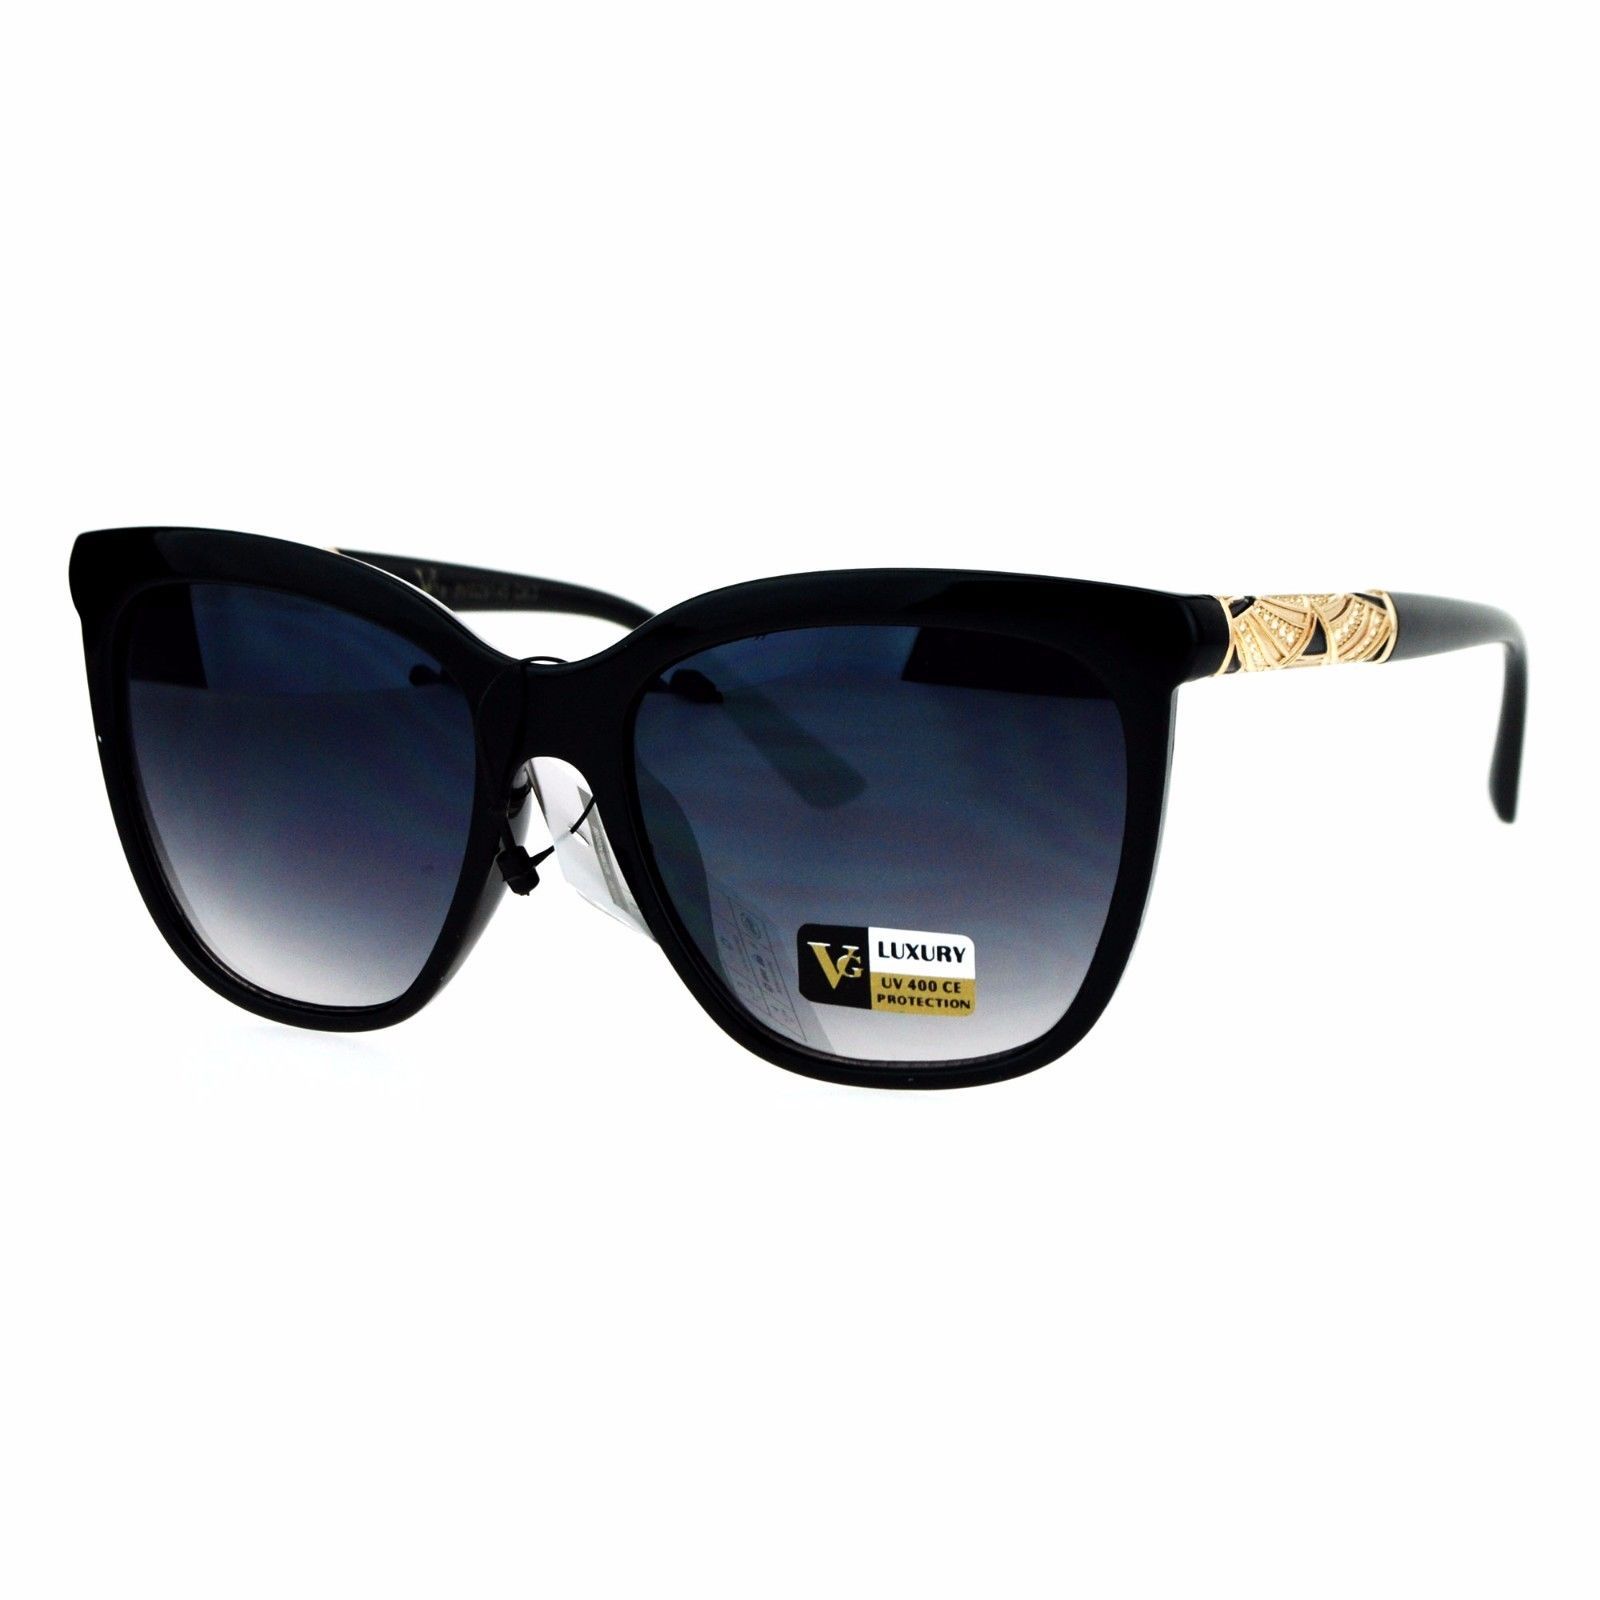 Primary image for Womens Luxury Fashion Sunglasses Stylish Square Frame UV 400